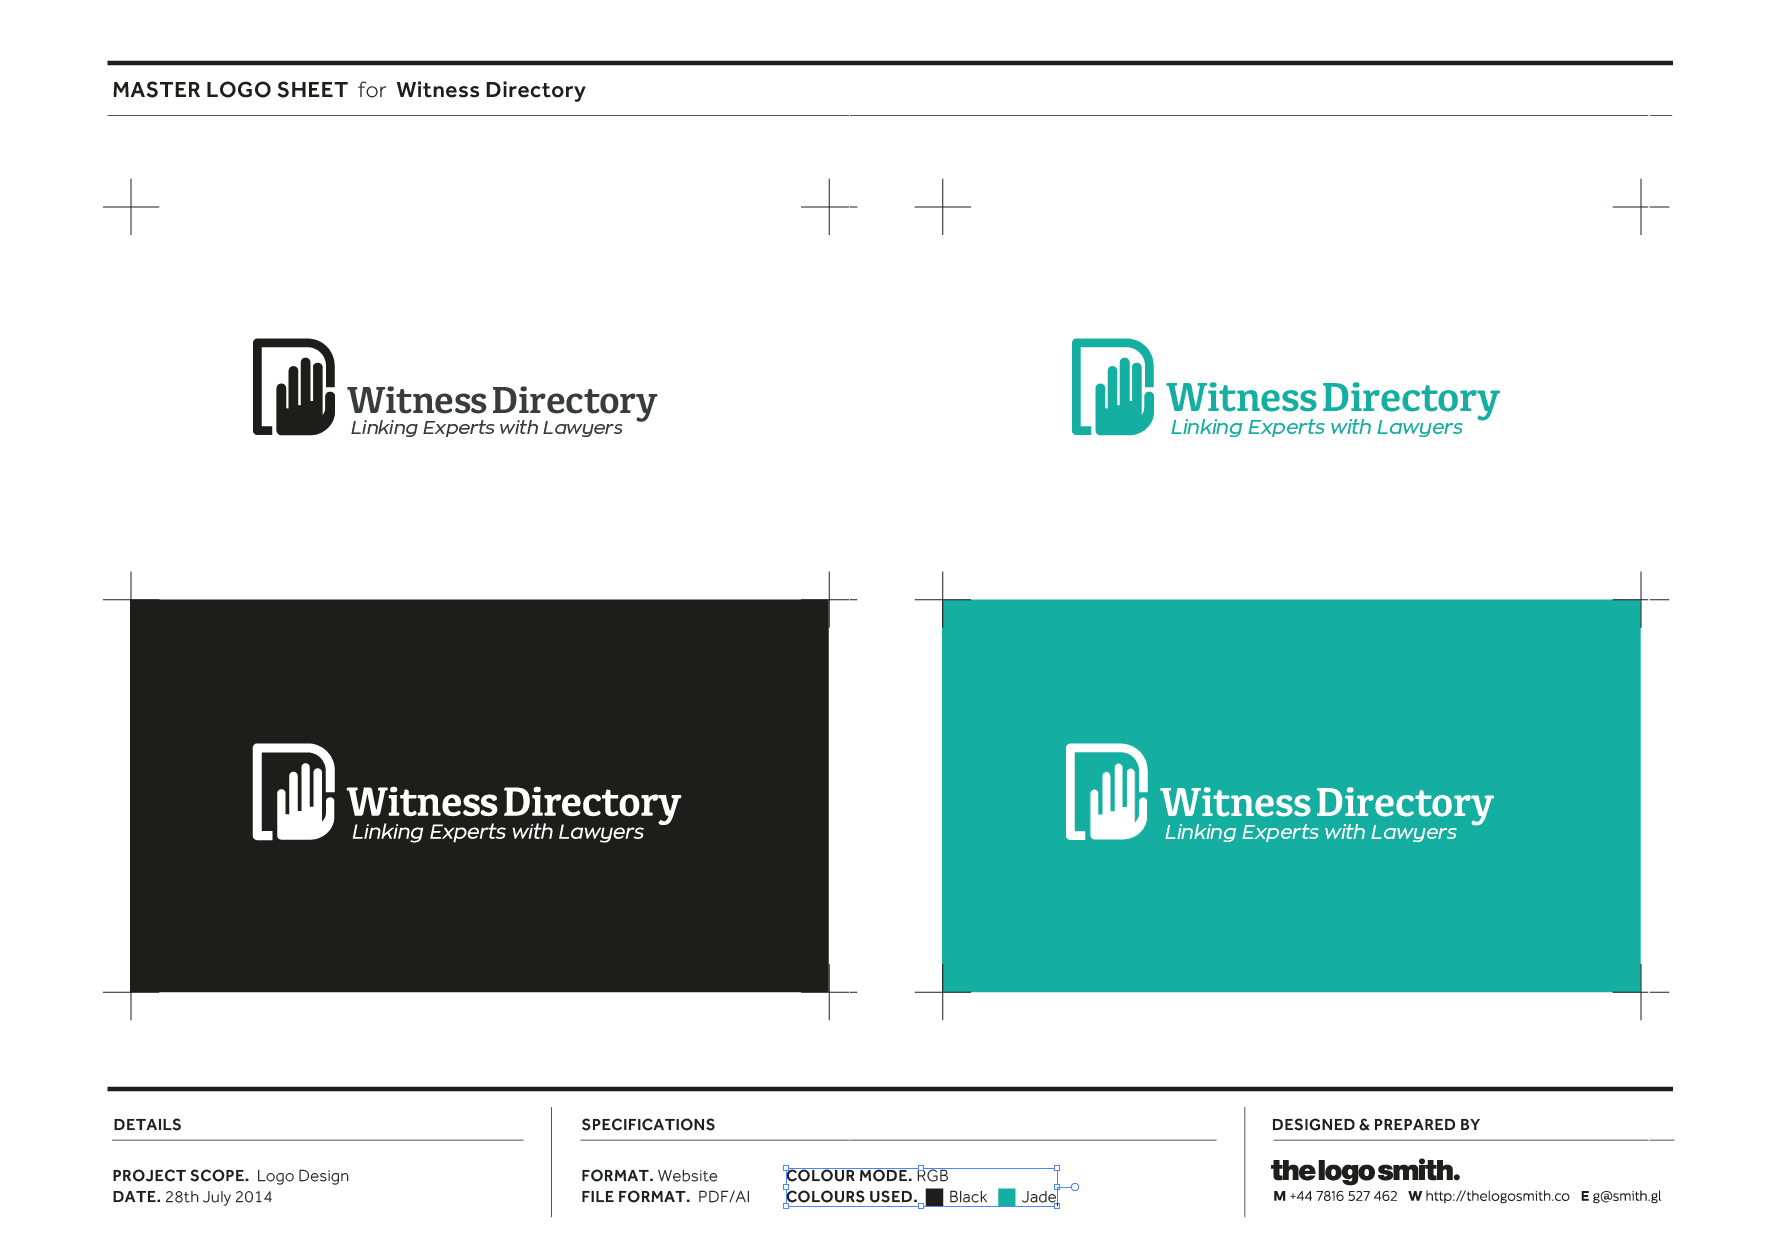 Witness Directory Client Logo Sheet